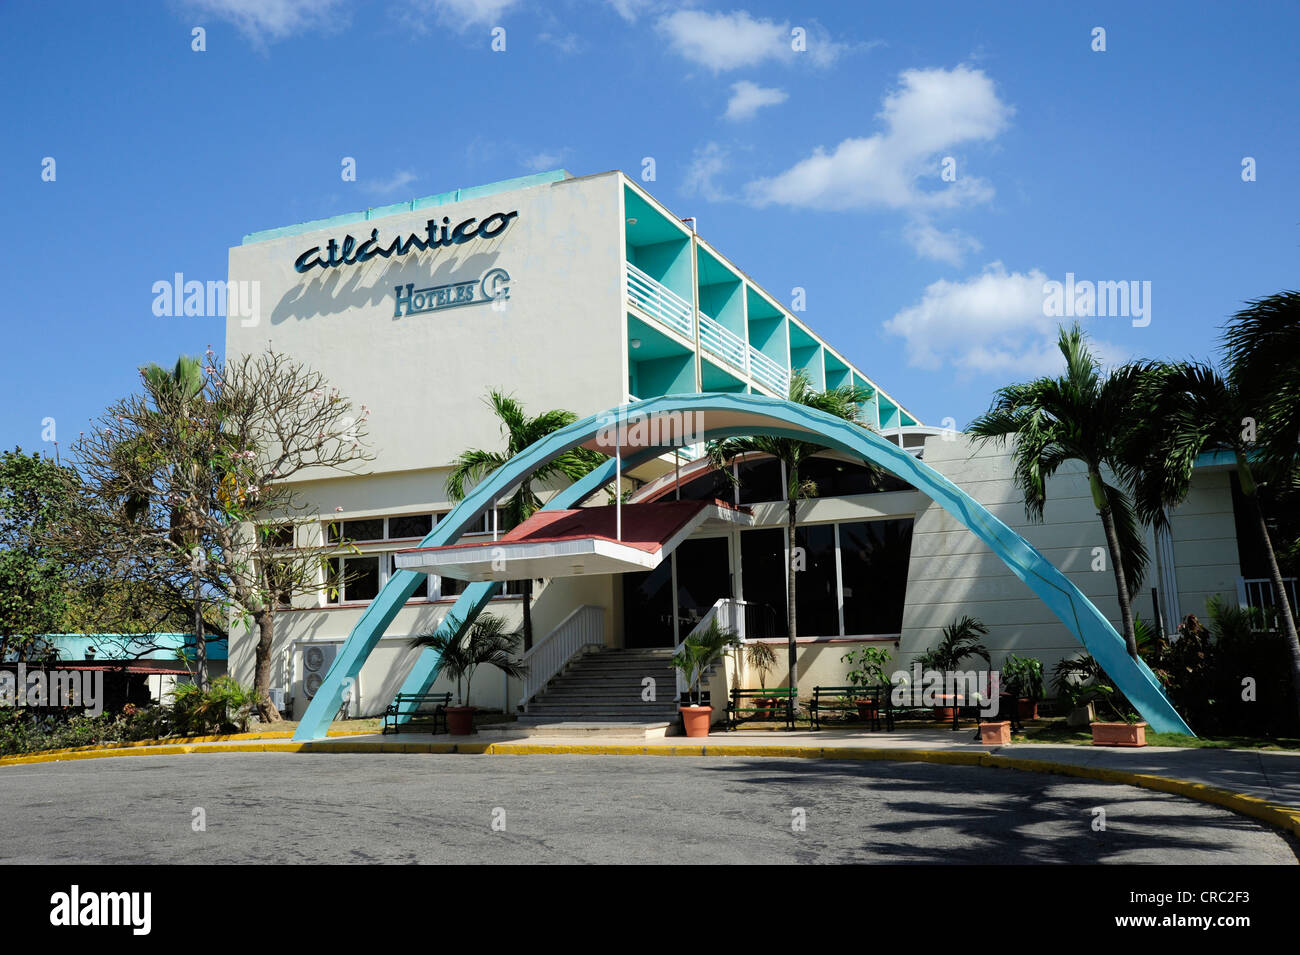 L'hôtel Atlantico à la plage, Santa Maria del Mar, Playas del Este, La Havane, La Havane, Cuba, Antilles, Golfe du Mexique Banque D'Images